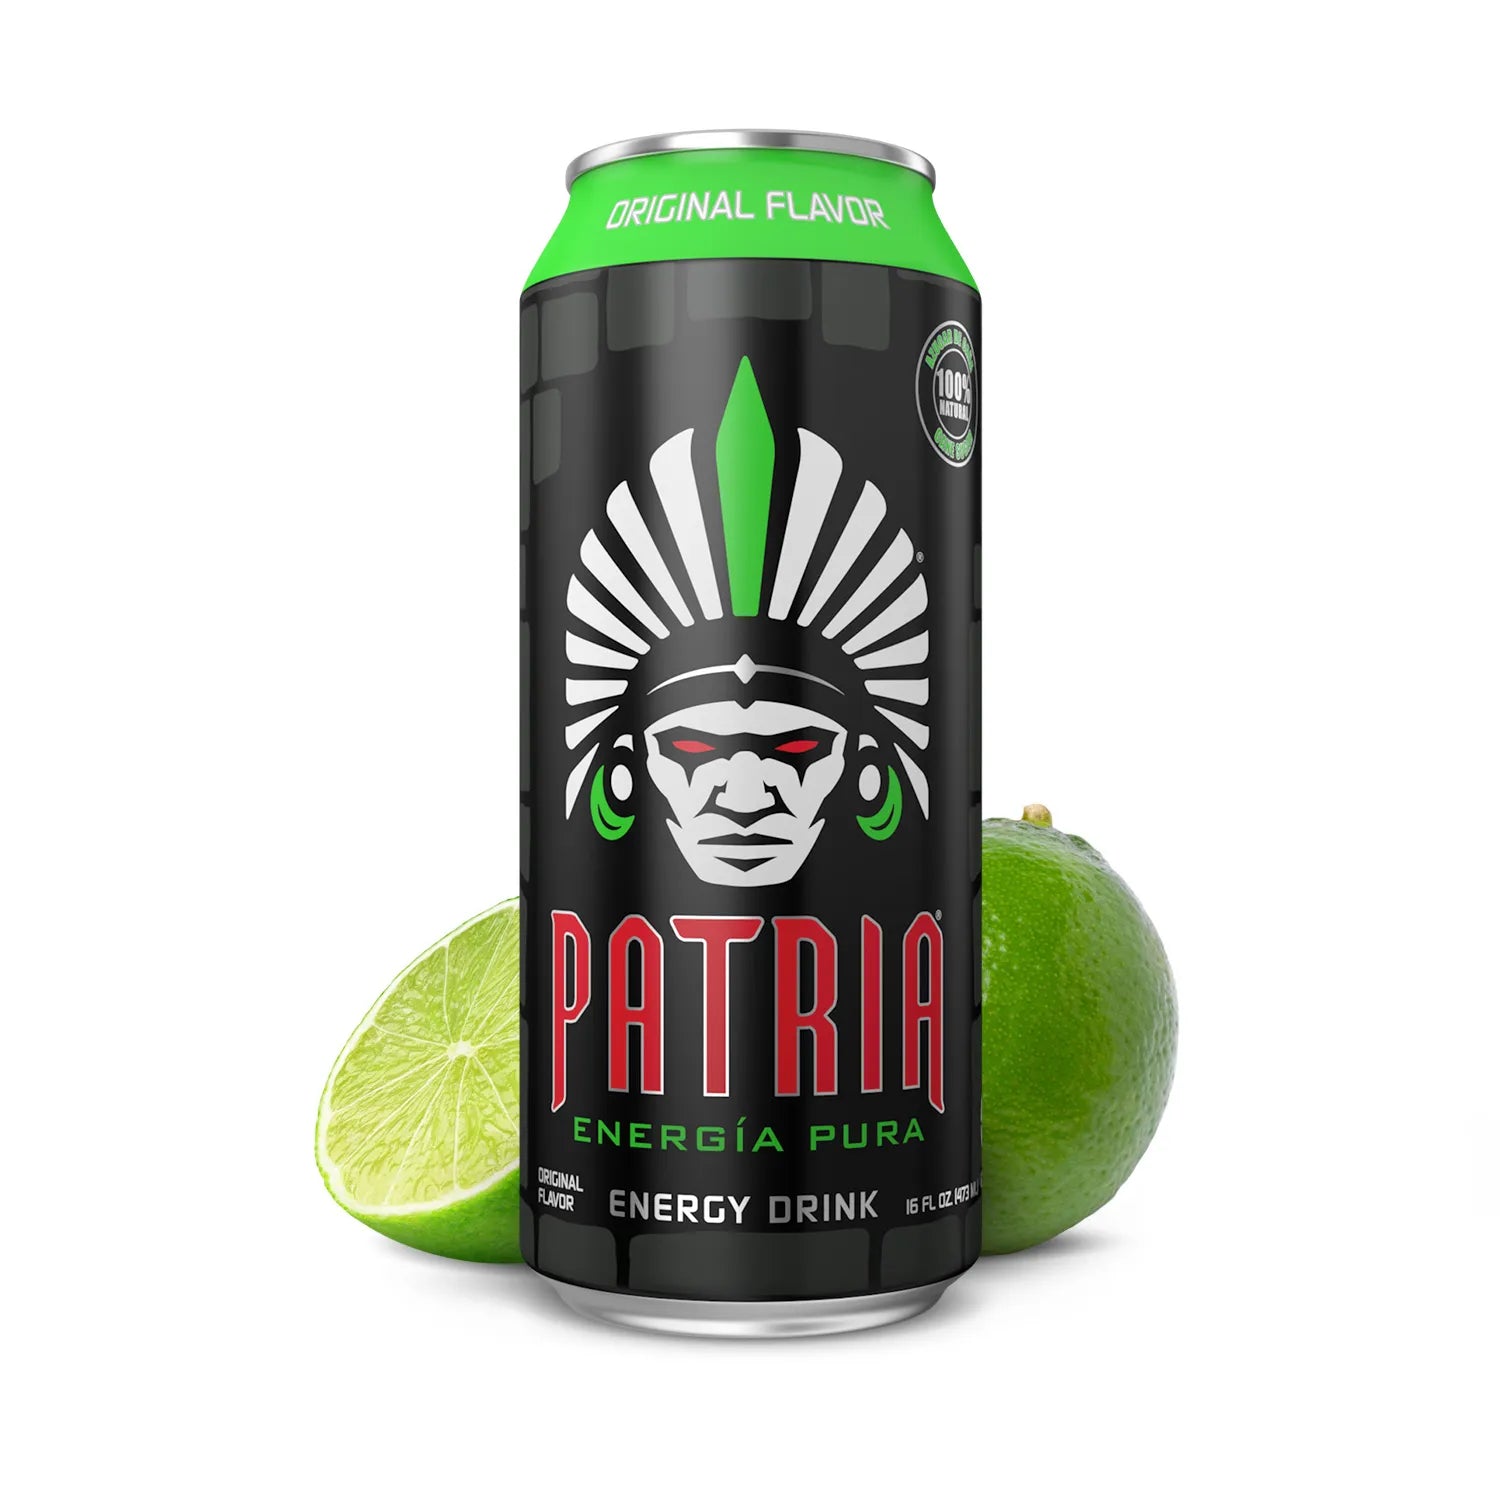 Patria Energy Drink - Original - 16 oz Can (12 Pack Case)